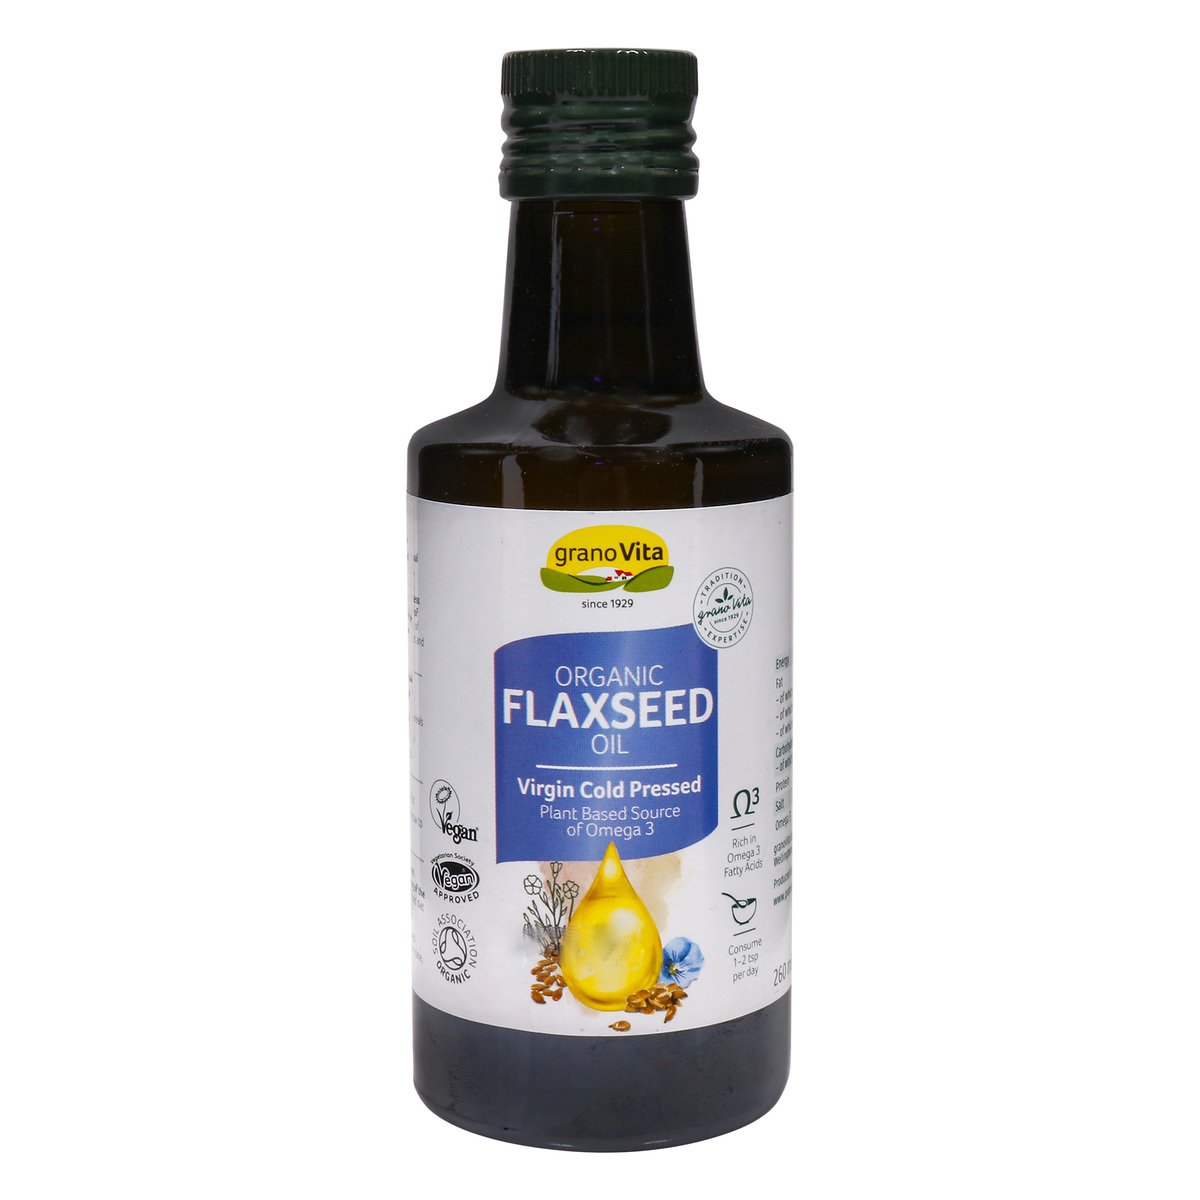 Granovita Organic Flax Oil 260 ml